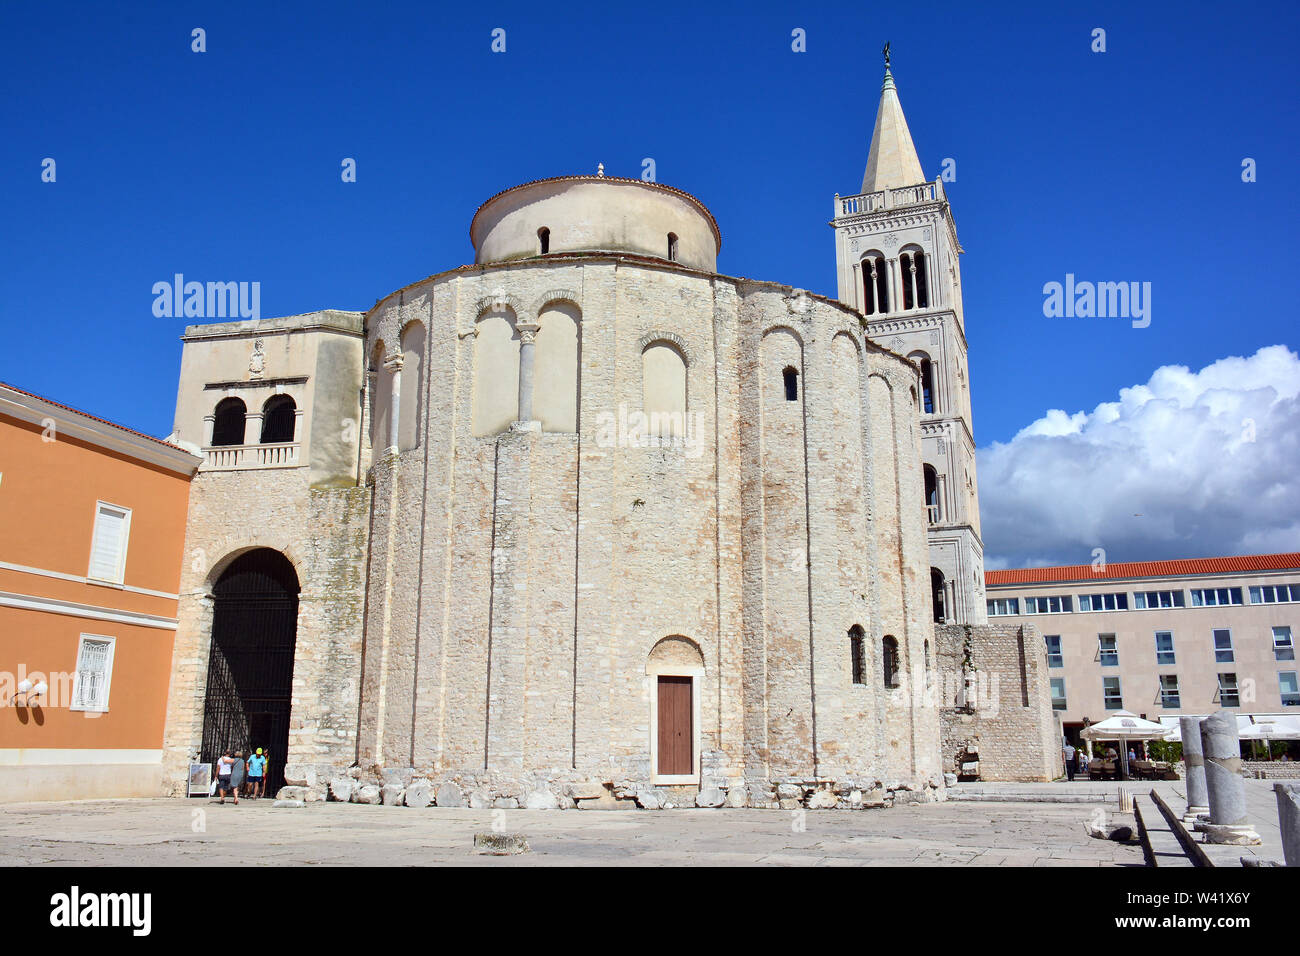 Church of St Donatus, Crkva sv. Donata, Zadar, Croatia, Europe, UNESCO World Heritage Site Stock Photo